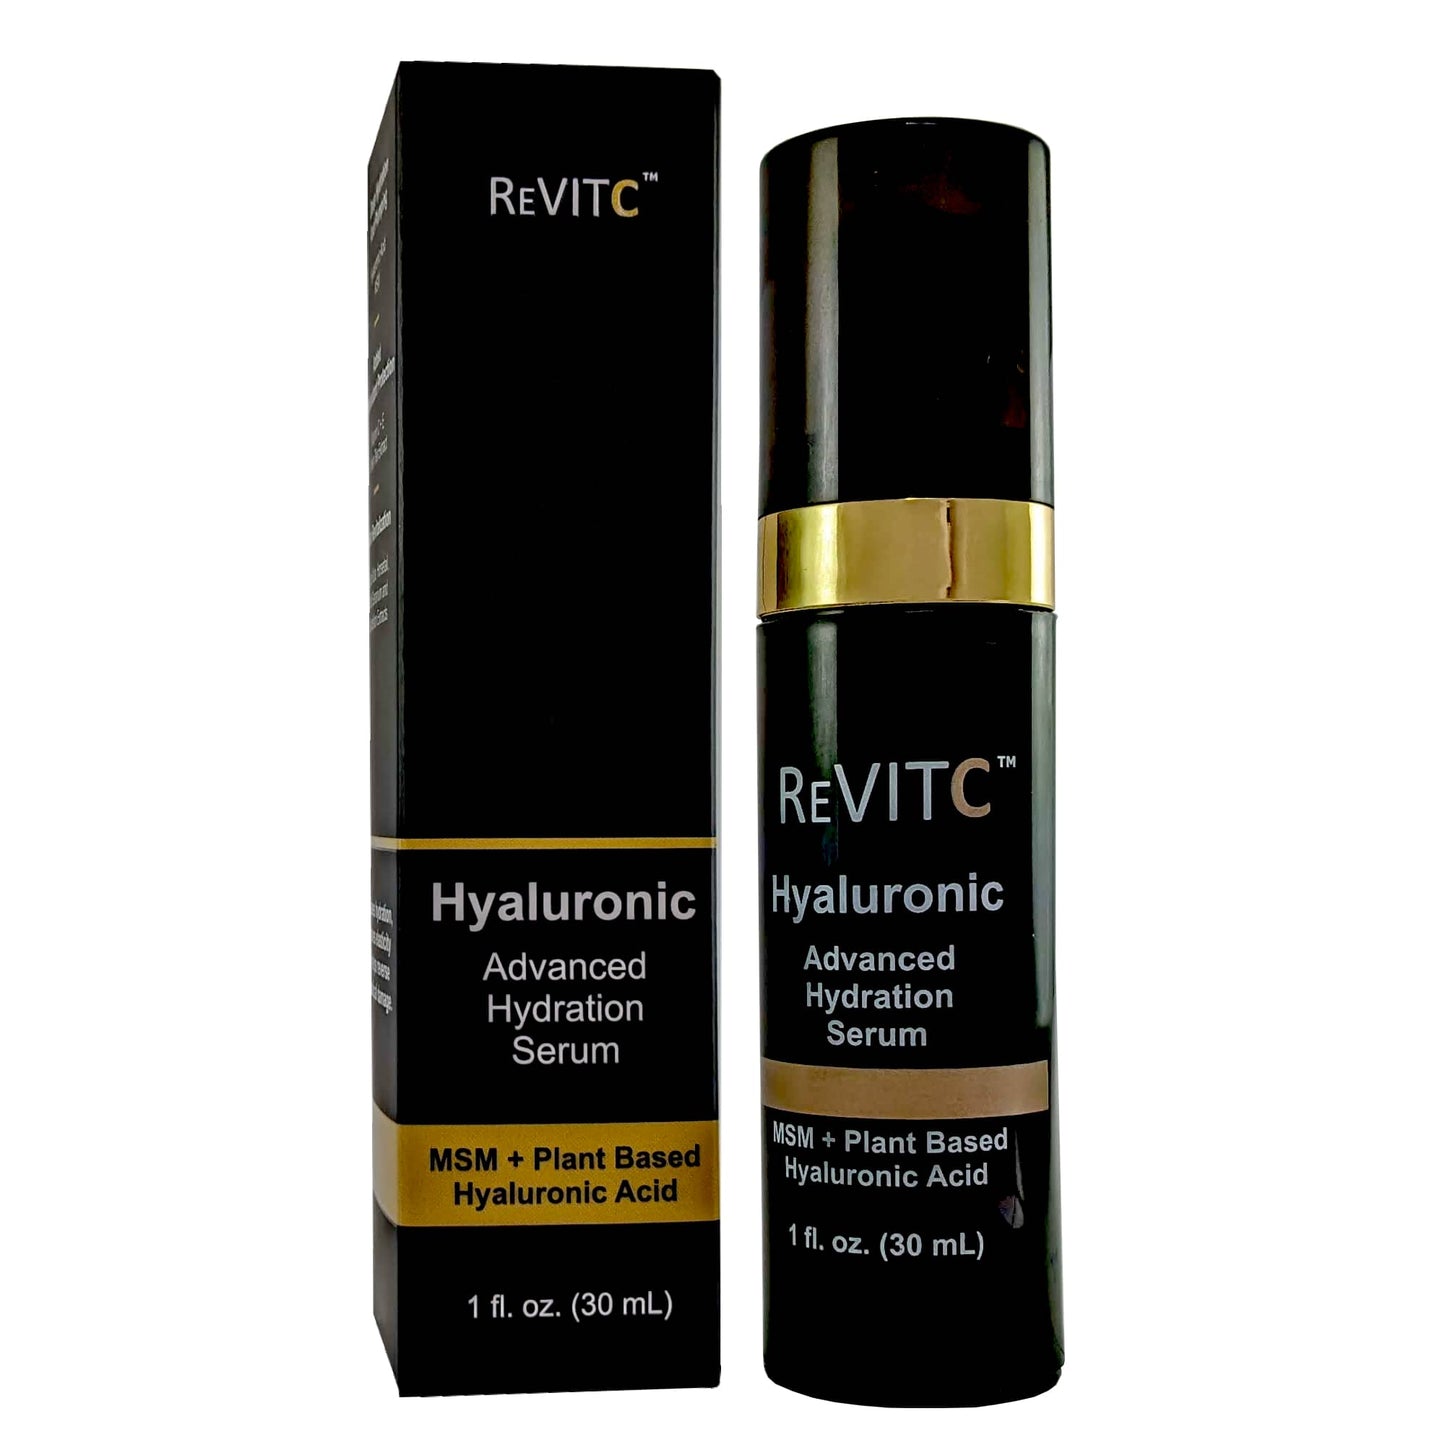 ReVITC Hyaluronic Advanced Hydration Serum